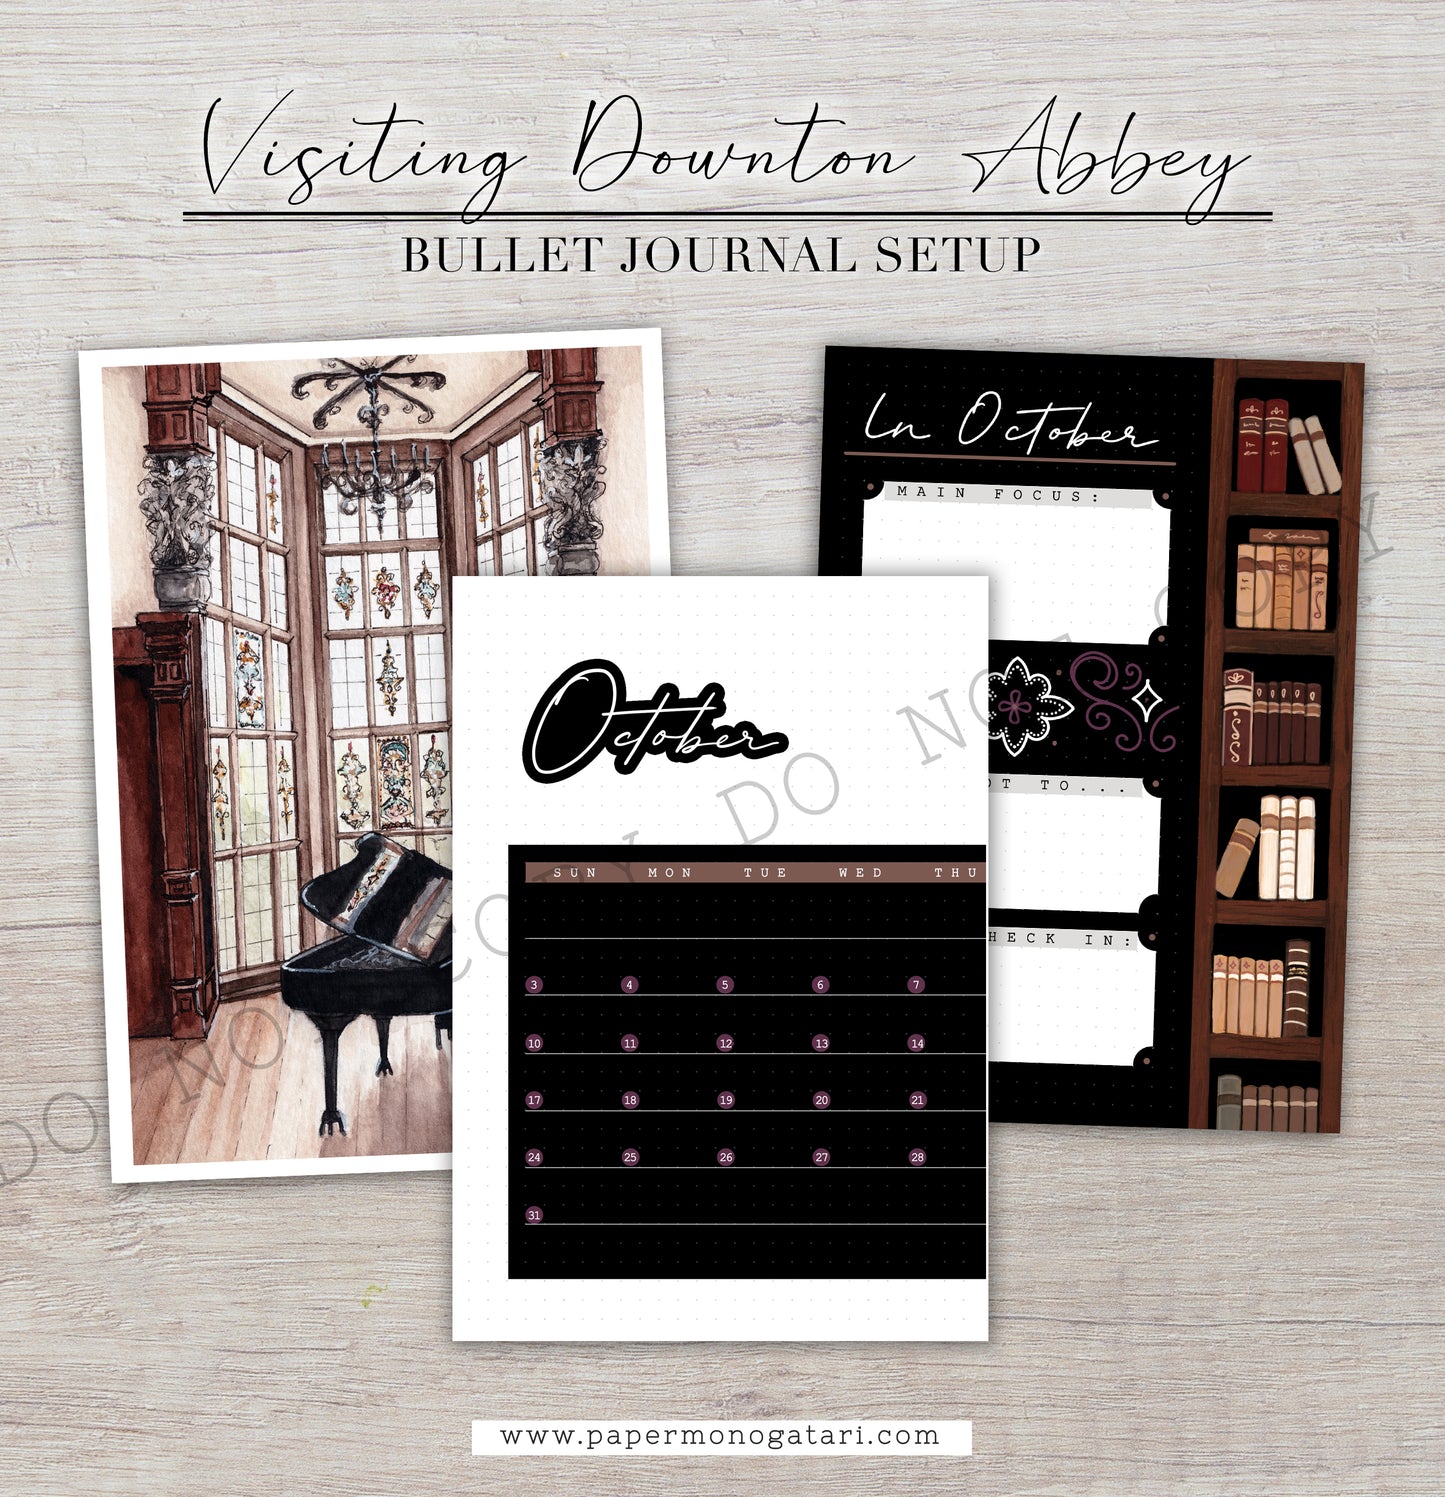 Visiting Downton Abbey | Digital Bullet Journal Theme